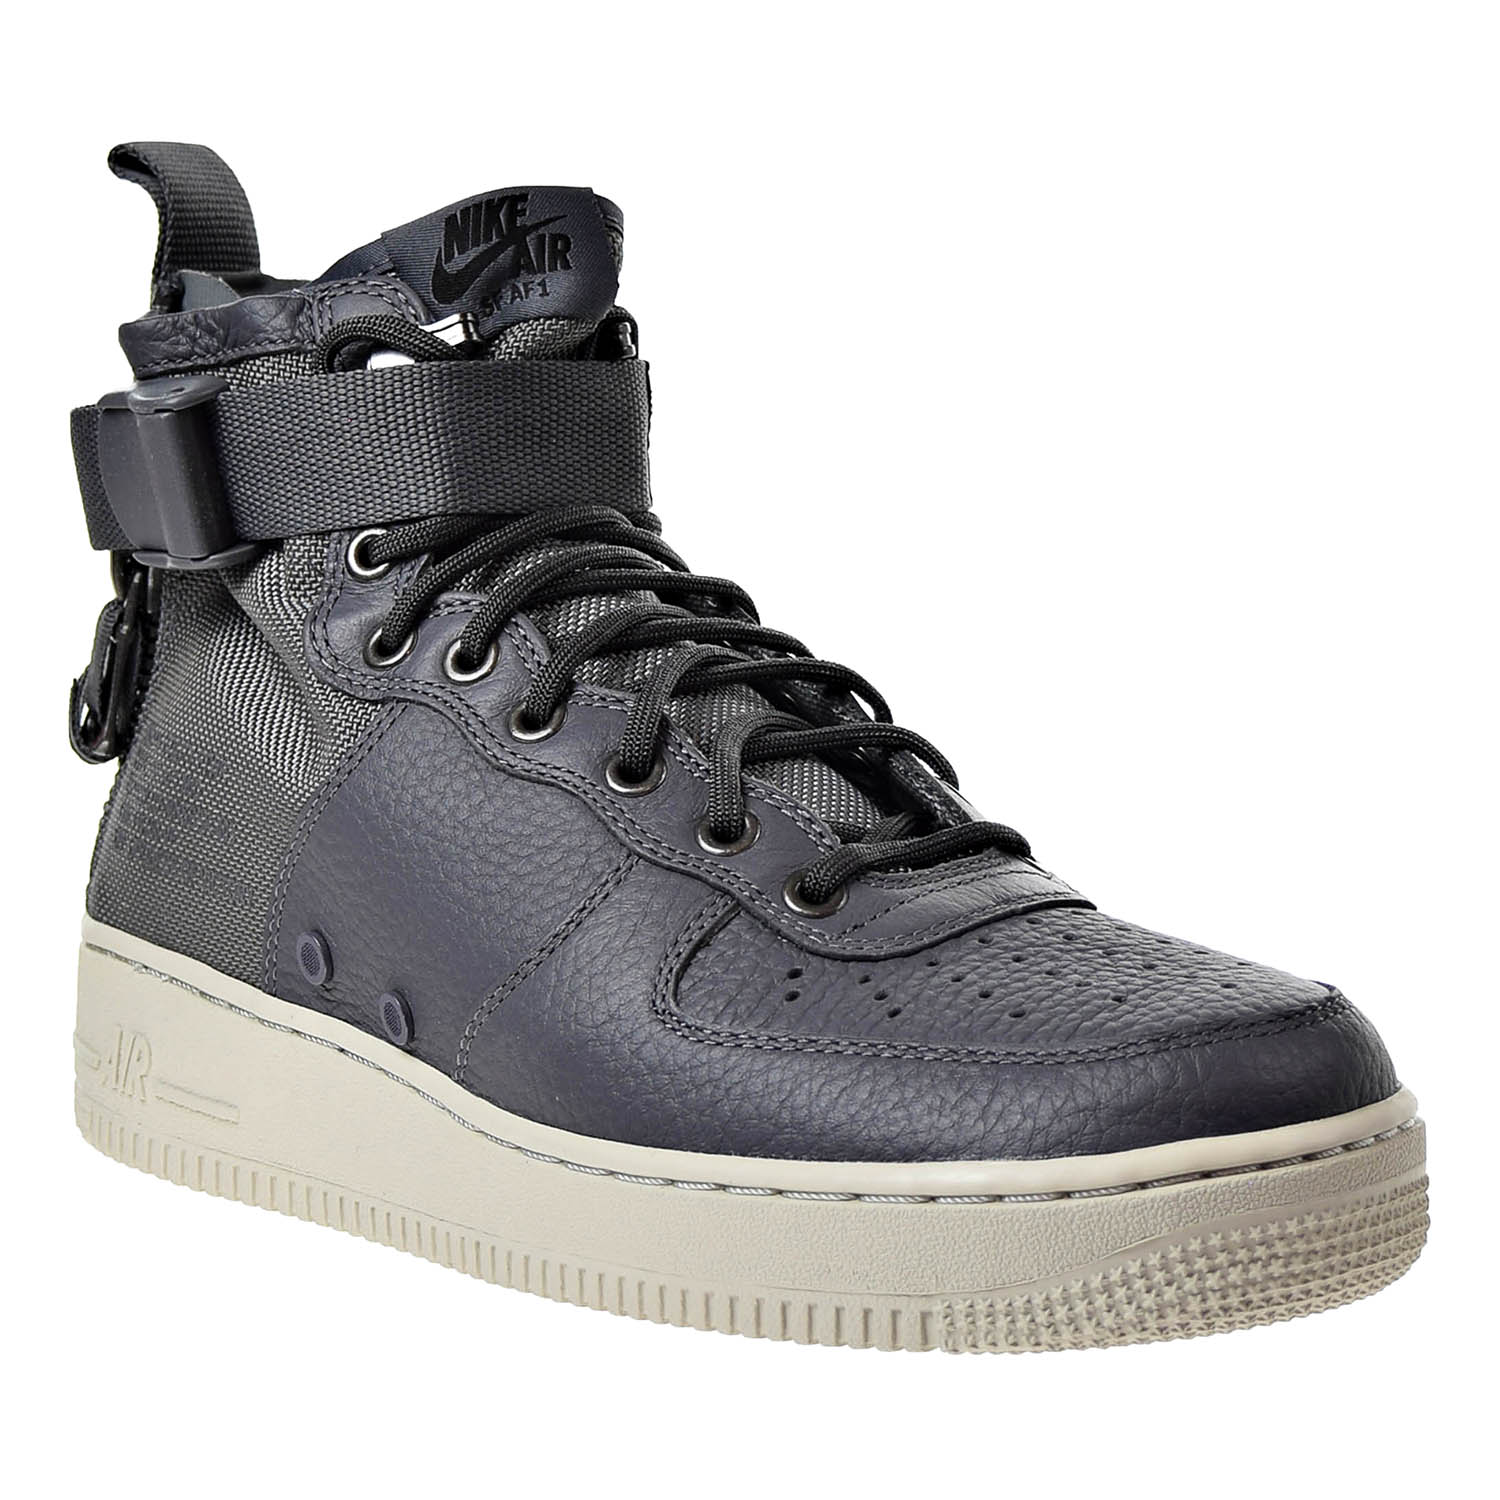 Nike SF Air Force 1 Mid Men's Shoes Dark Grey 917753-004 | eBay